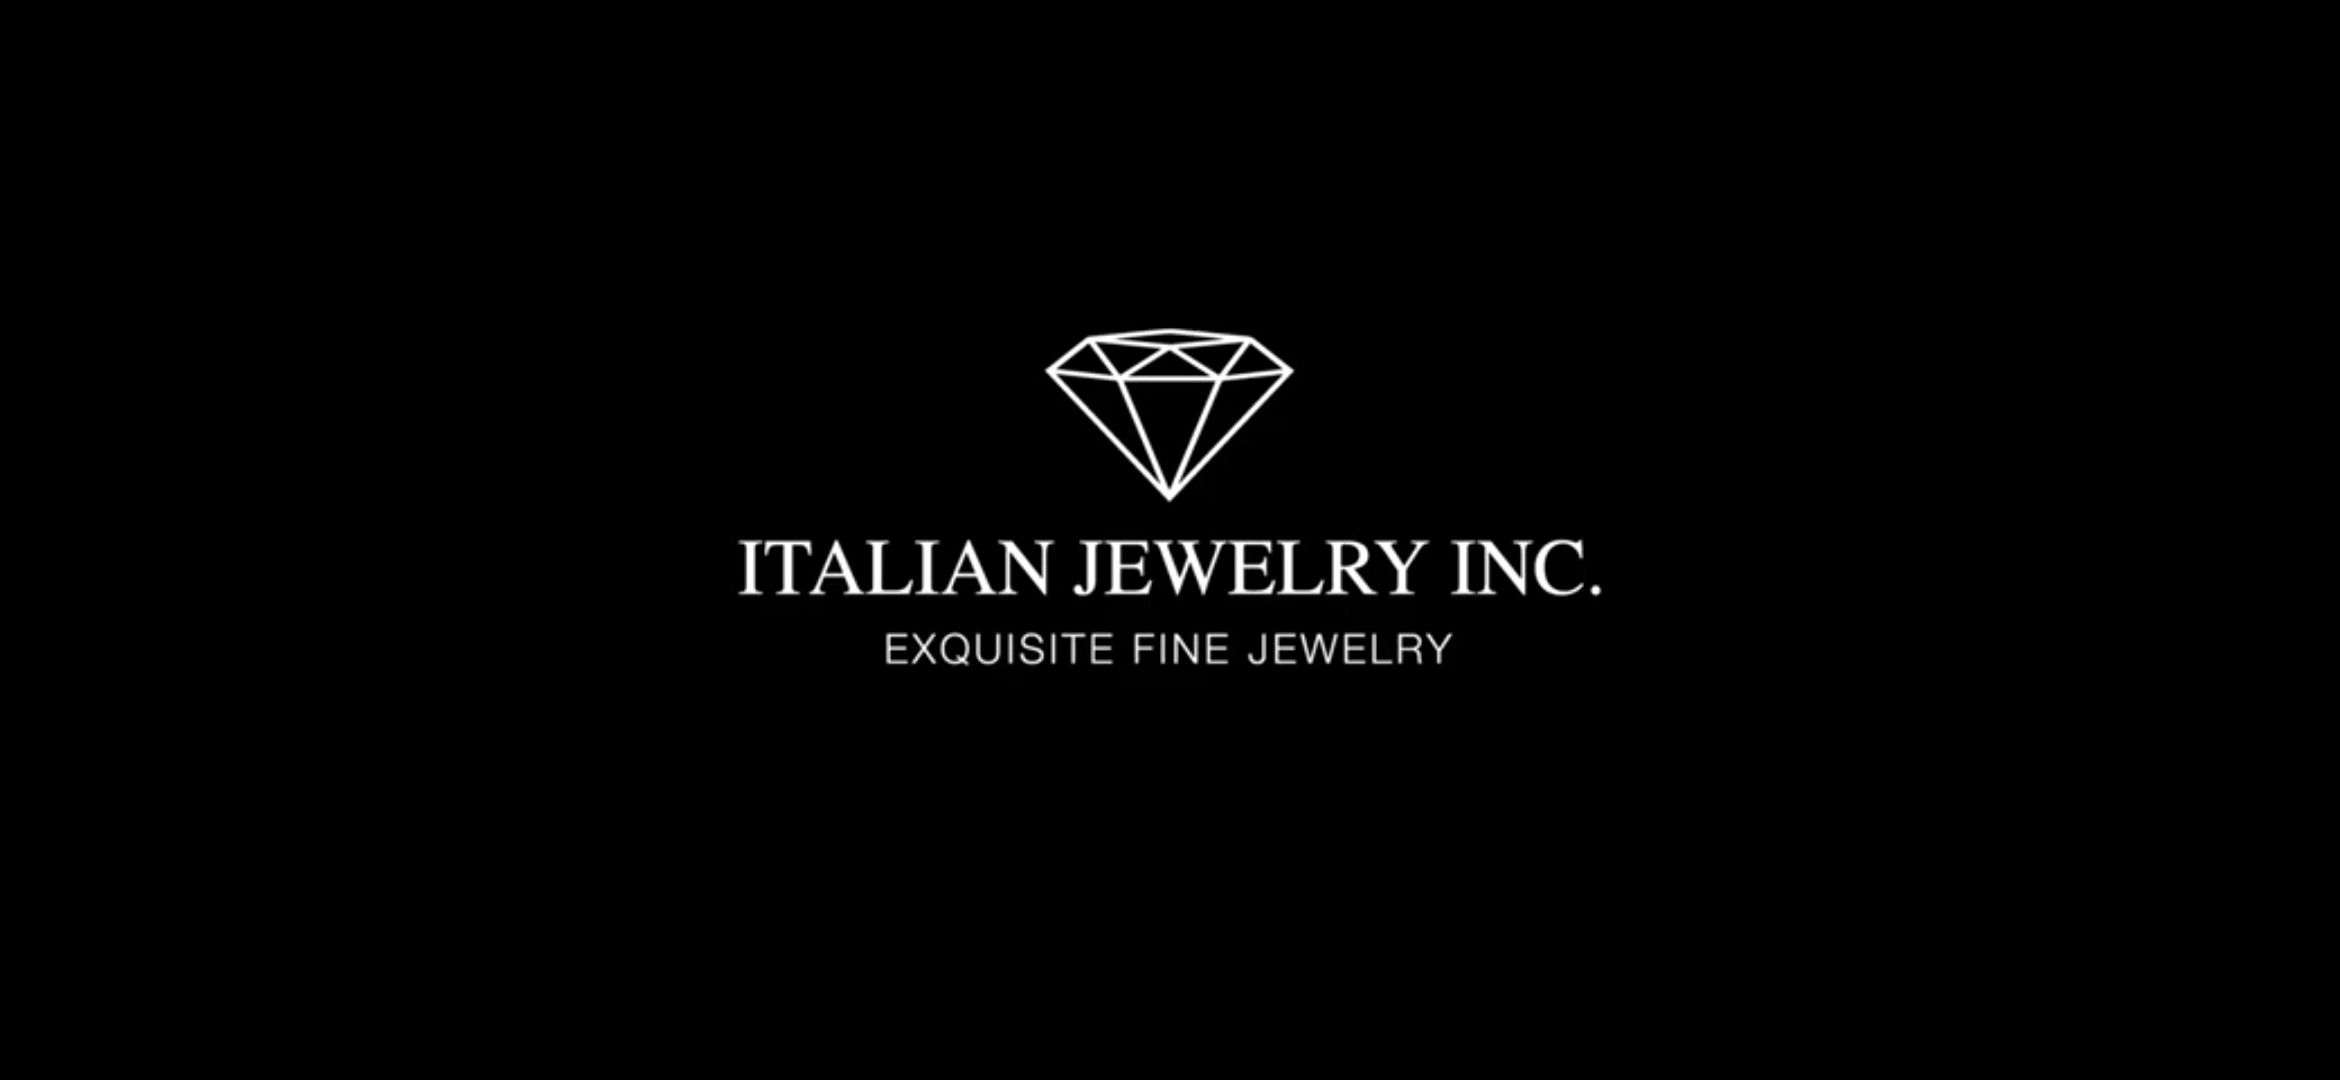 Italian Jewelry Inc - Jewelry, Joyería, Anillos De Compromiso, Joyas